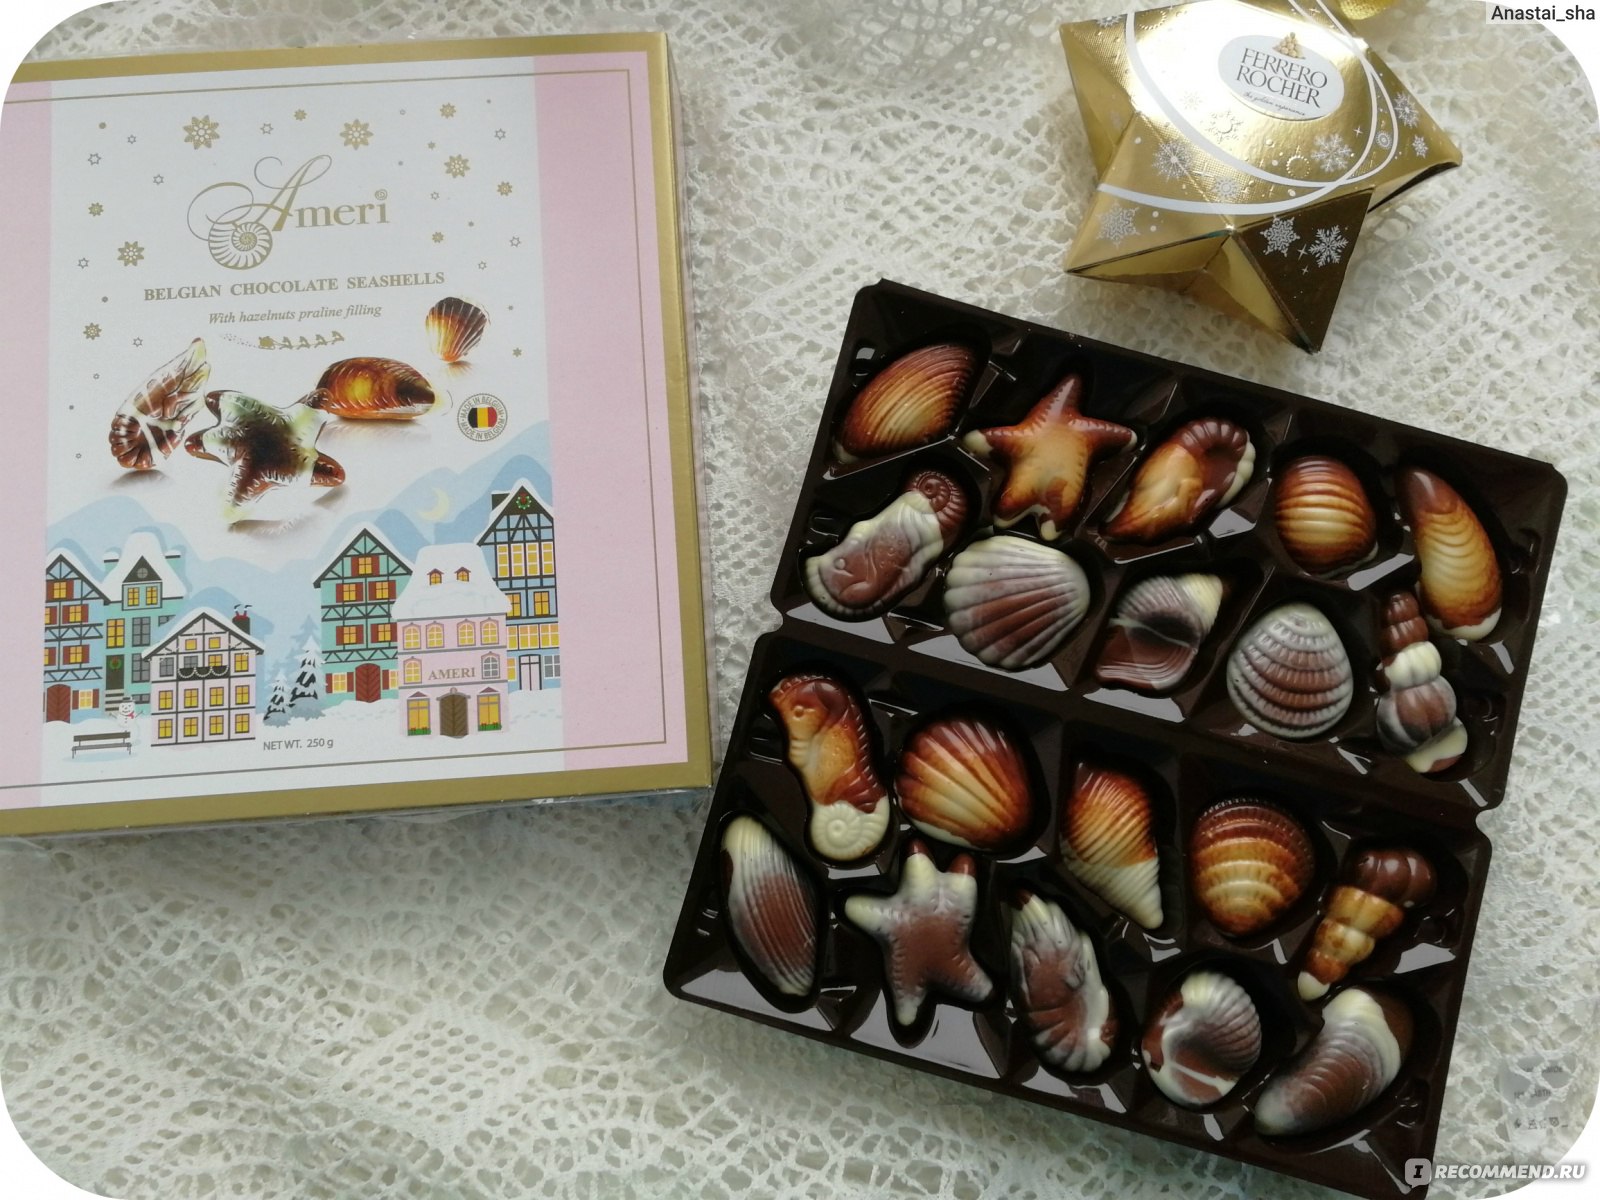 Бельгийский шоколад ракушки Ameri